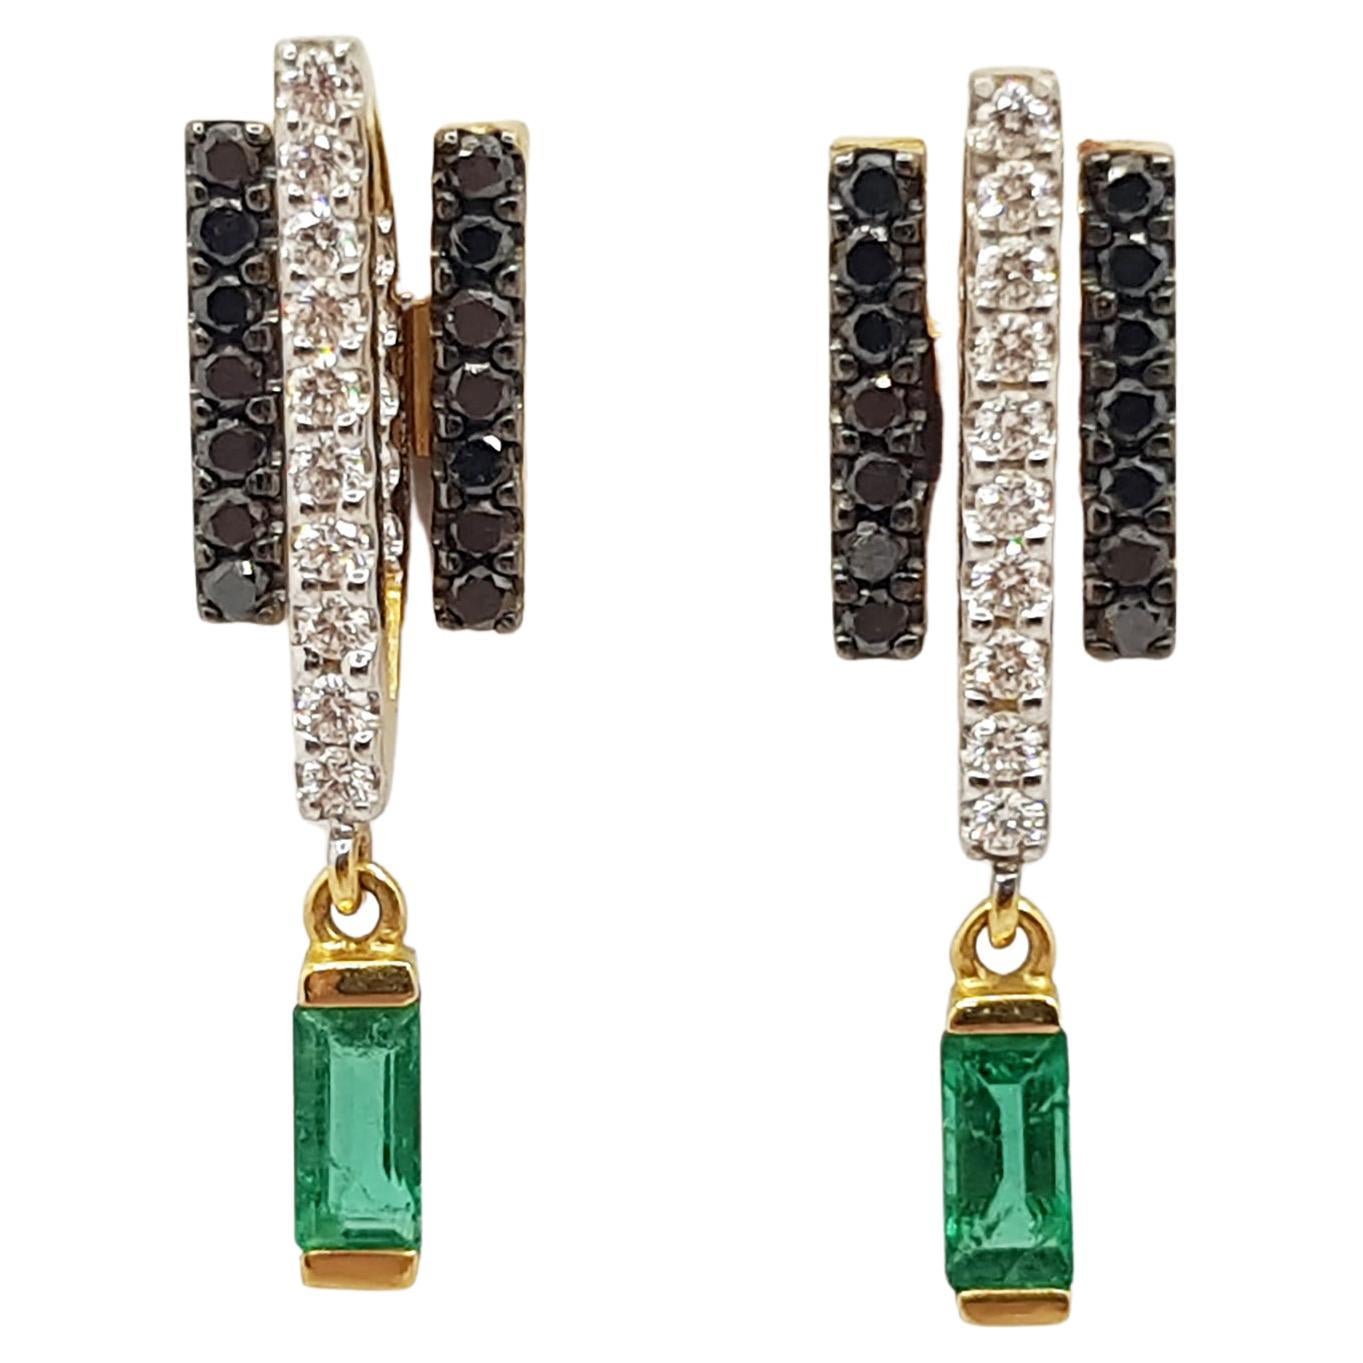 Emerald 0.42 carat, Diamond 0.27 carat and Black Diamond 0.31 carat GeoArt Earrings set in 18 Karat Gold Settings by Kavant & Sharart

Width:  0.7 cm 
Length:  2.4 cm
Total Weight: 6.06 grams

